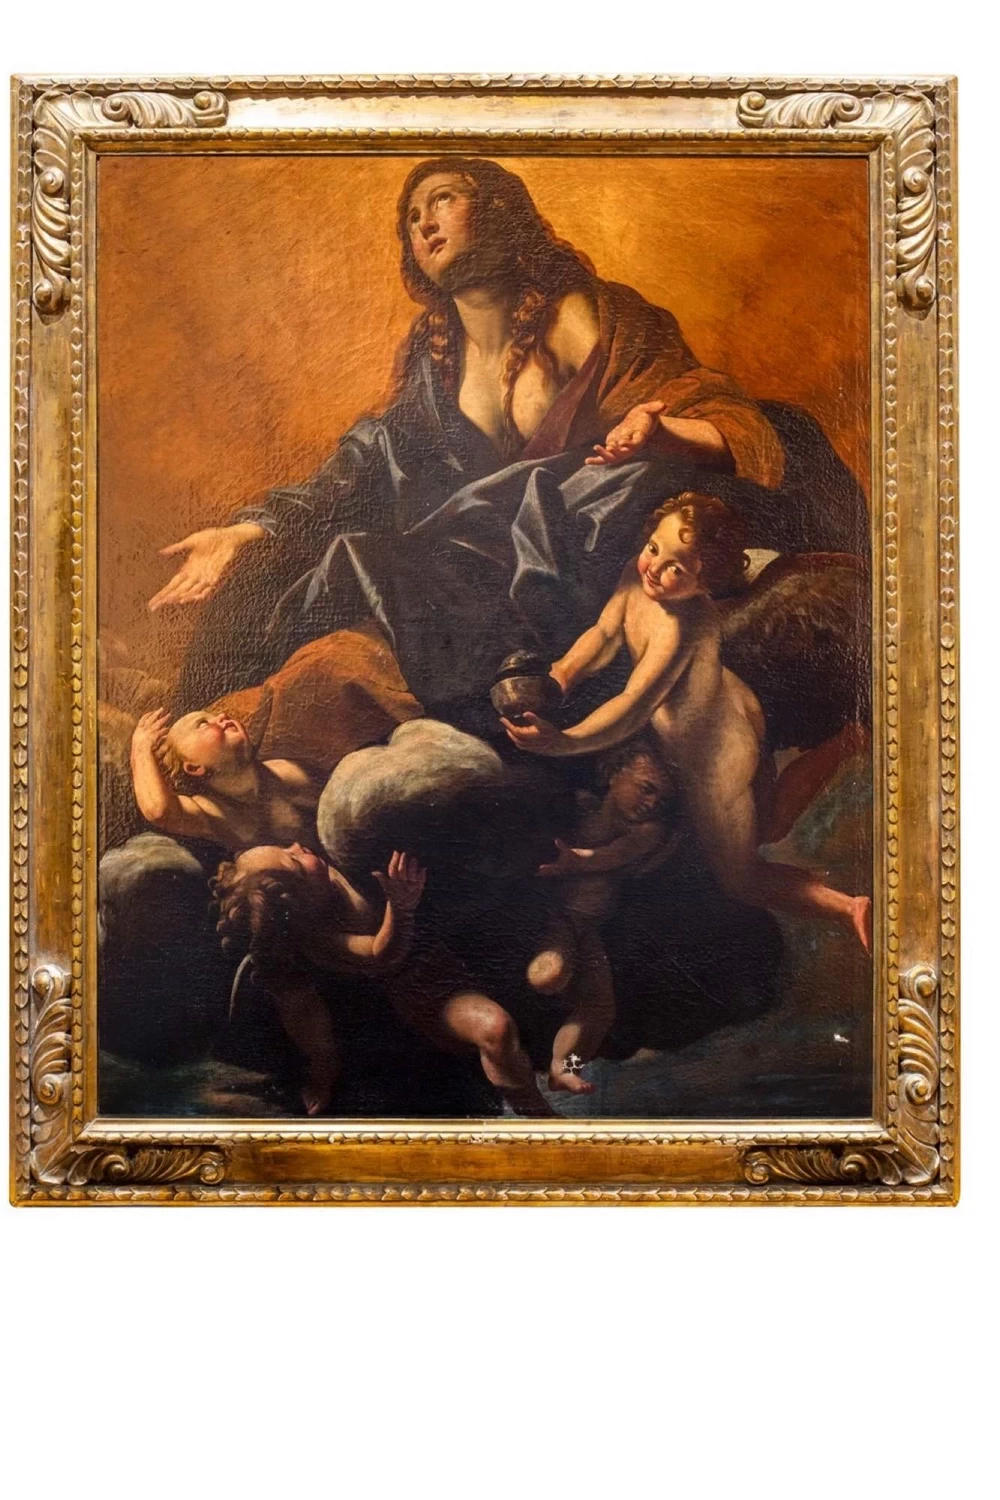  162-Giovanni Lanfranco-Santa Maria Maddalena circondata da angeli  